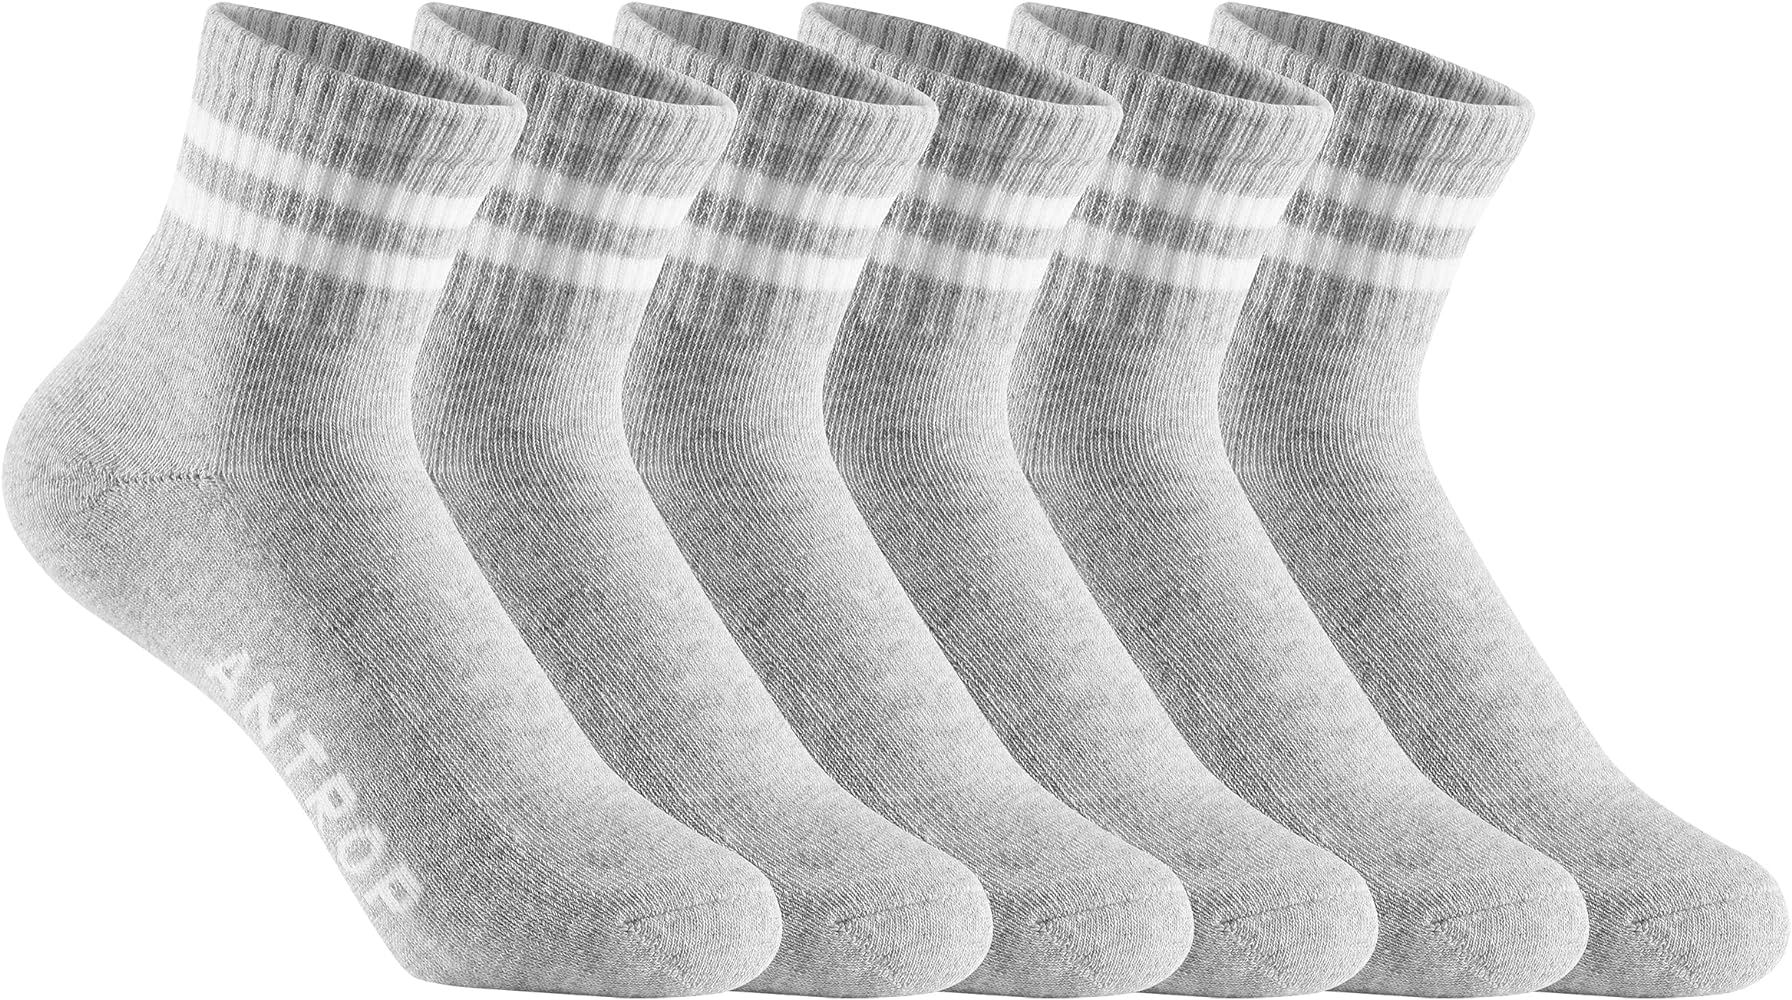 Antrop Quarter Crew Cotton Heel Tab Athletic Running Cushion 6 Pairs Socks, Grey, 9-12 | Amazon (US)